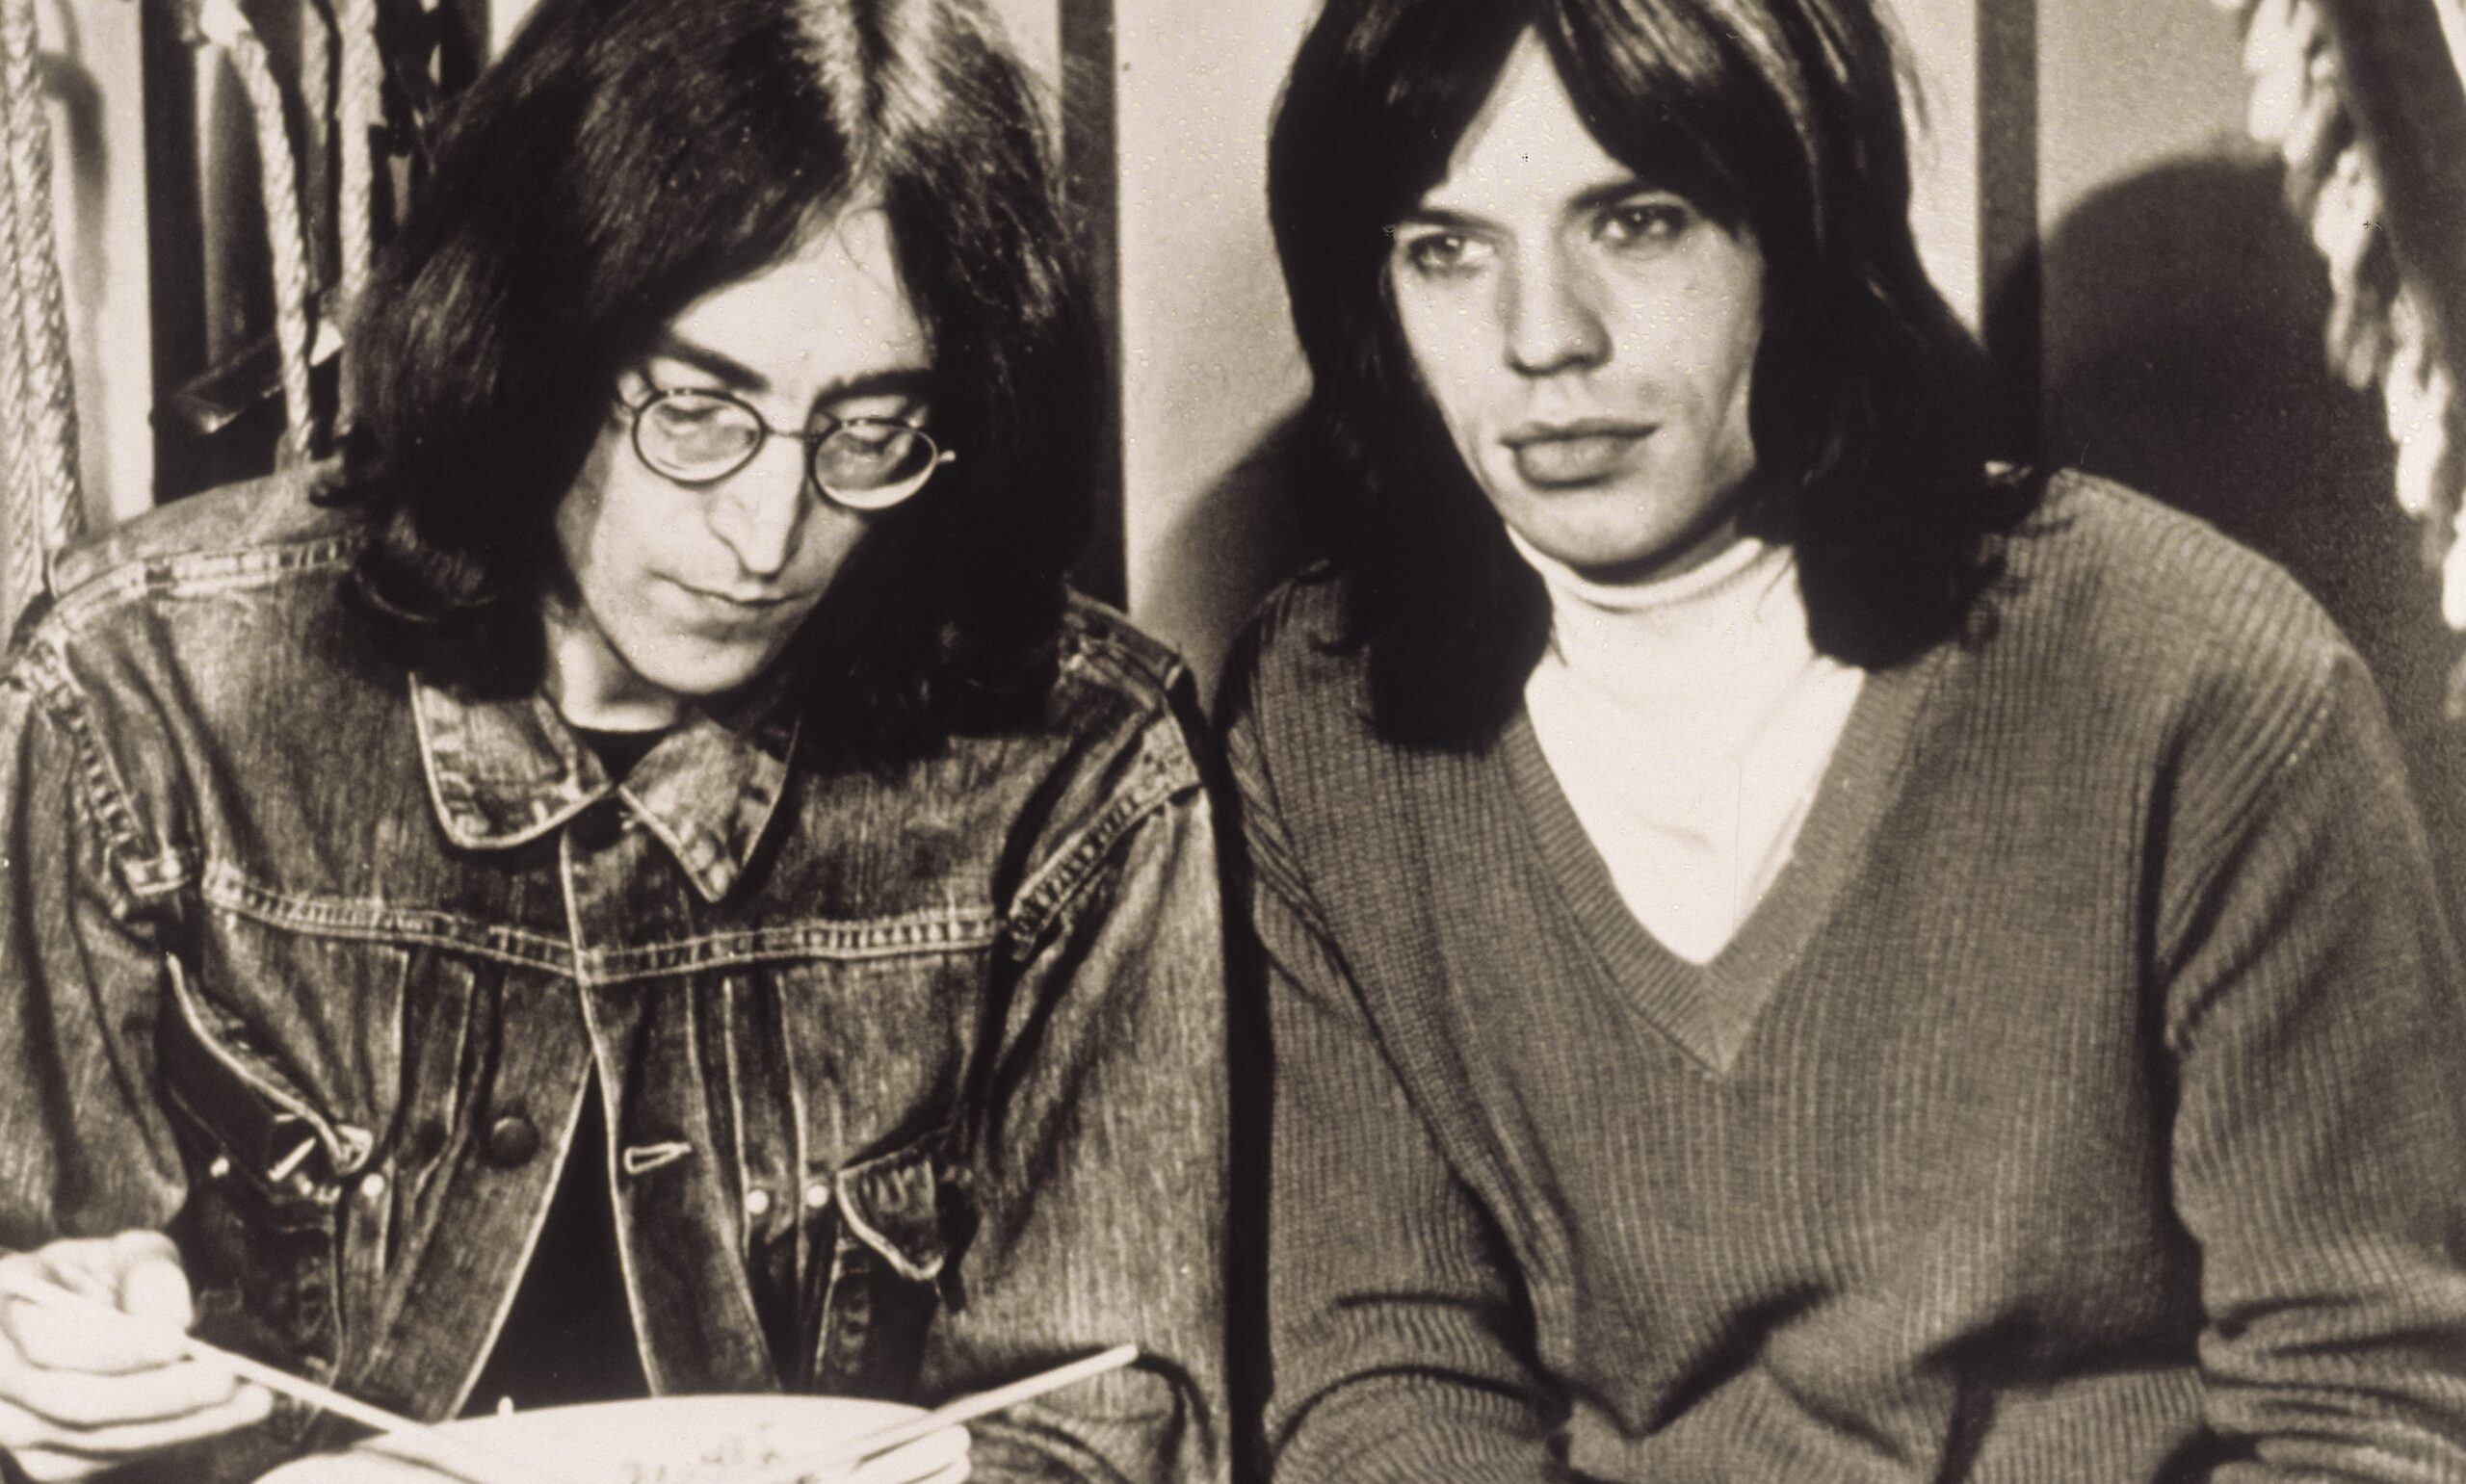 John Lennon und Mick Jagger